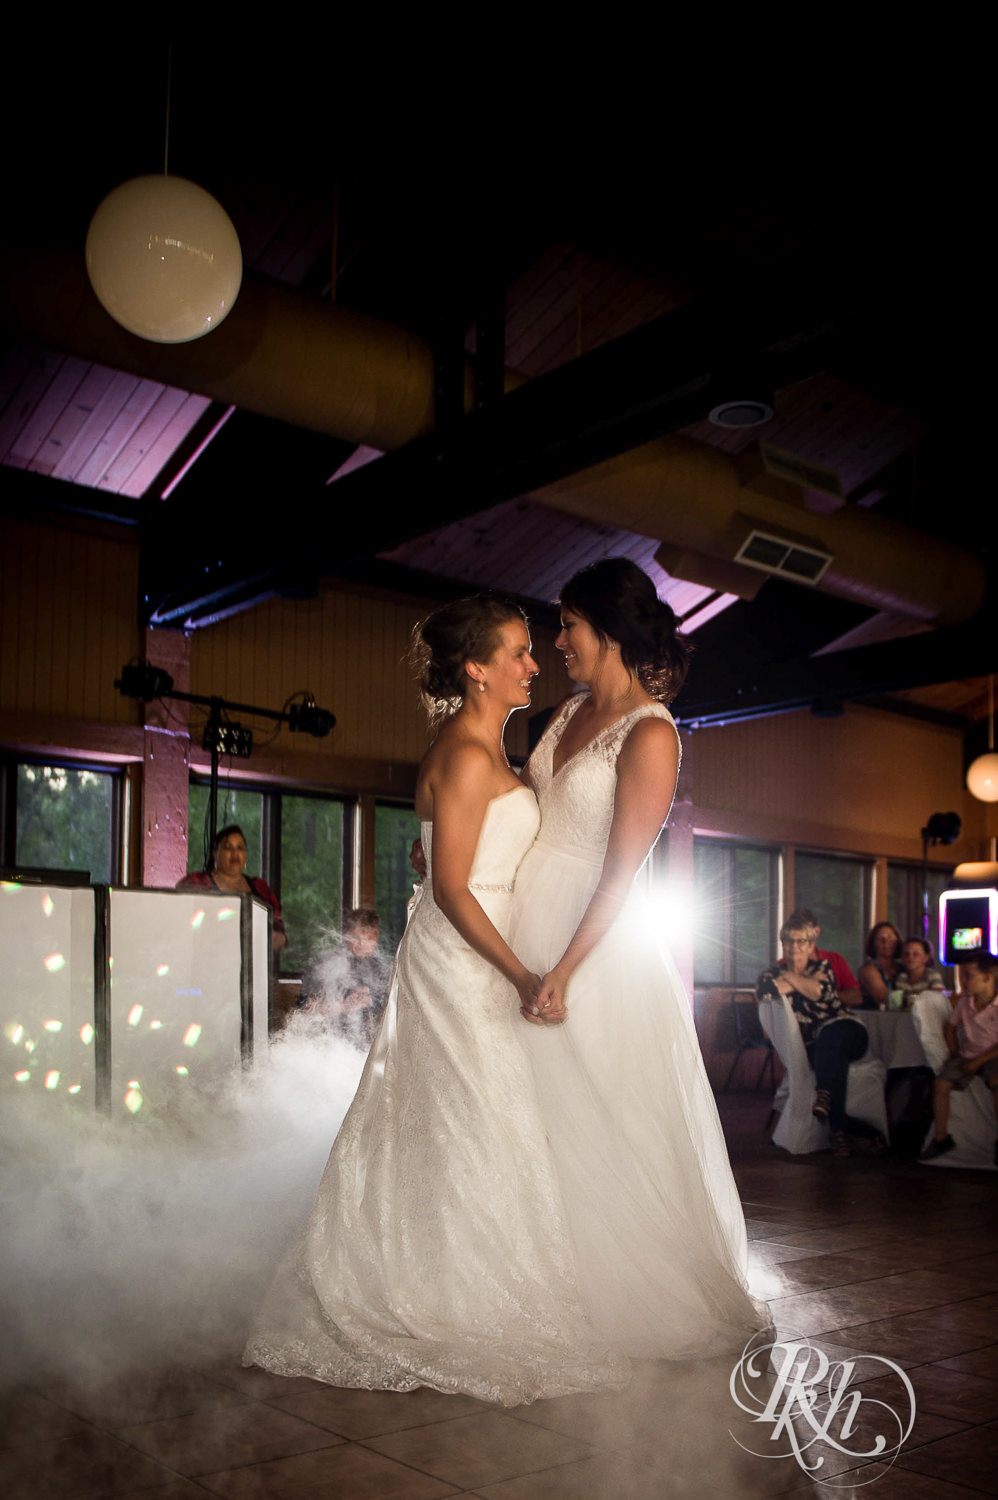 Lesbian brides dance during their wedding reception at Spirit Mountain in Duluth, Minnesota.